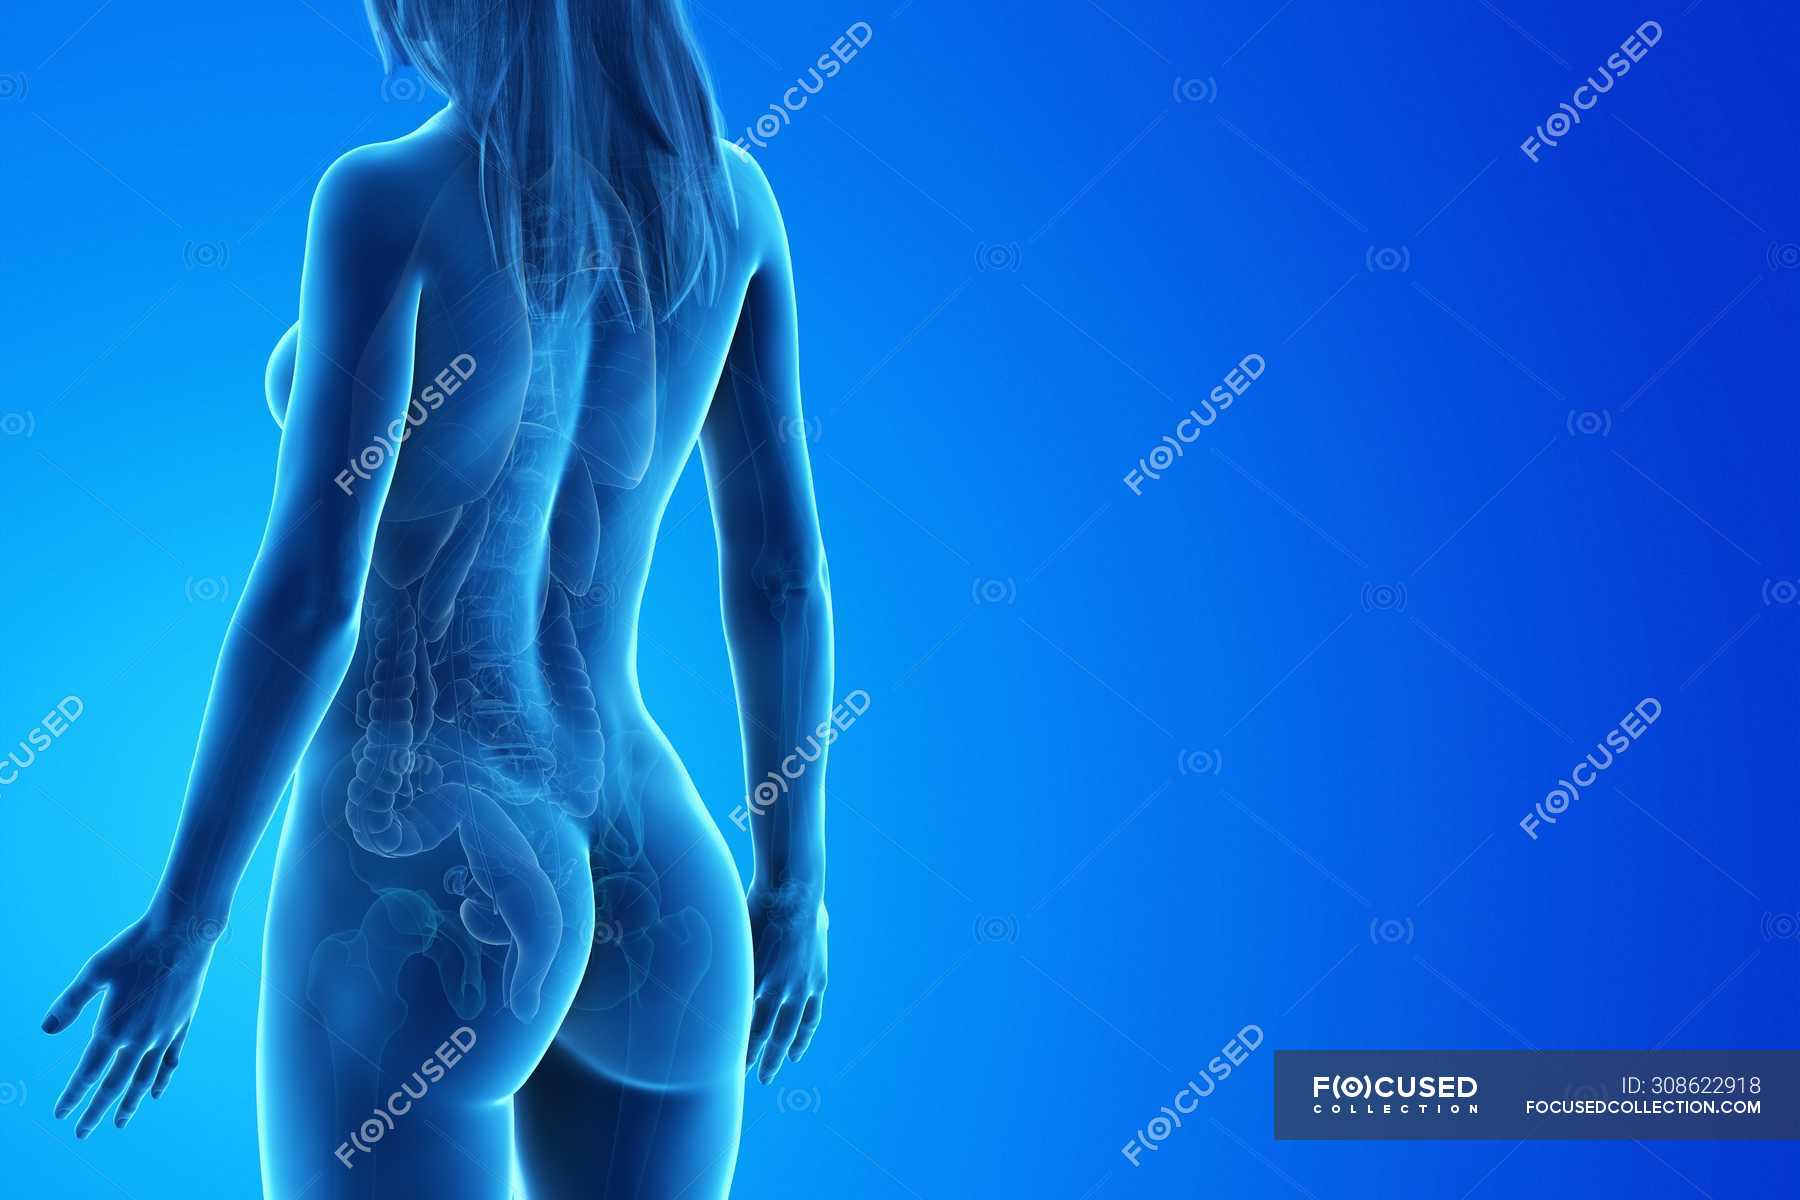 Human Body Model Showing Female Anatomy With Internal Organs In Rear View Digital 3d Render Illustration Large Intestine Human Anatomy Stock Photo 308622918